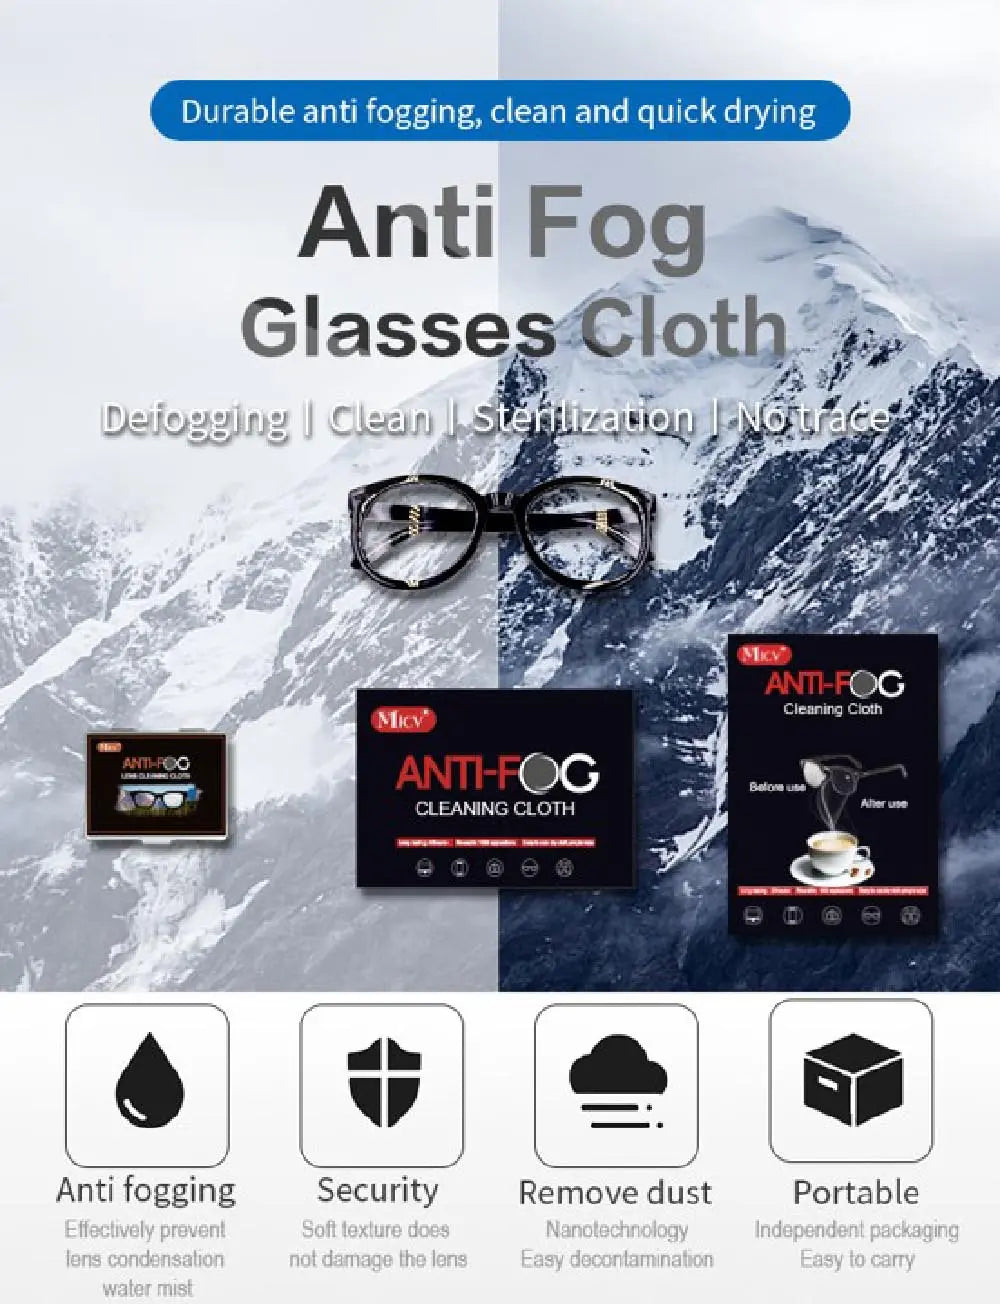 Anti-fog cloth for goggles,